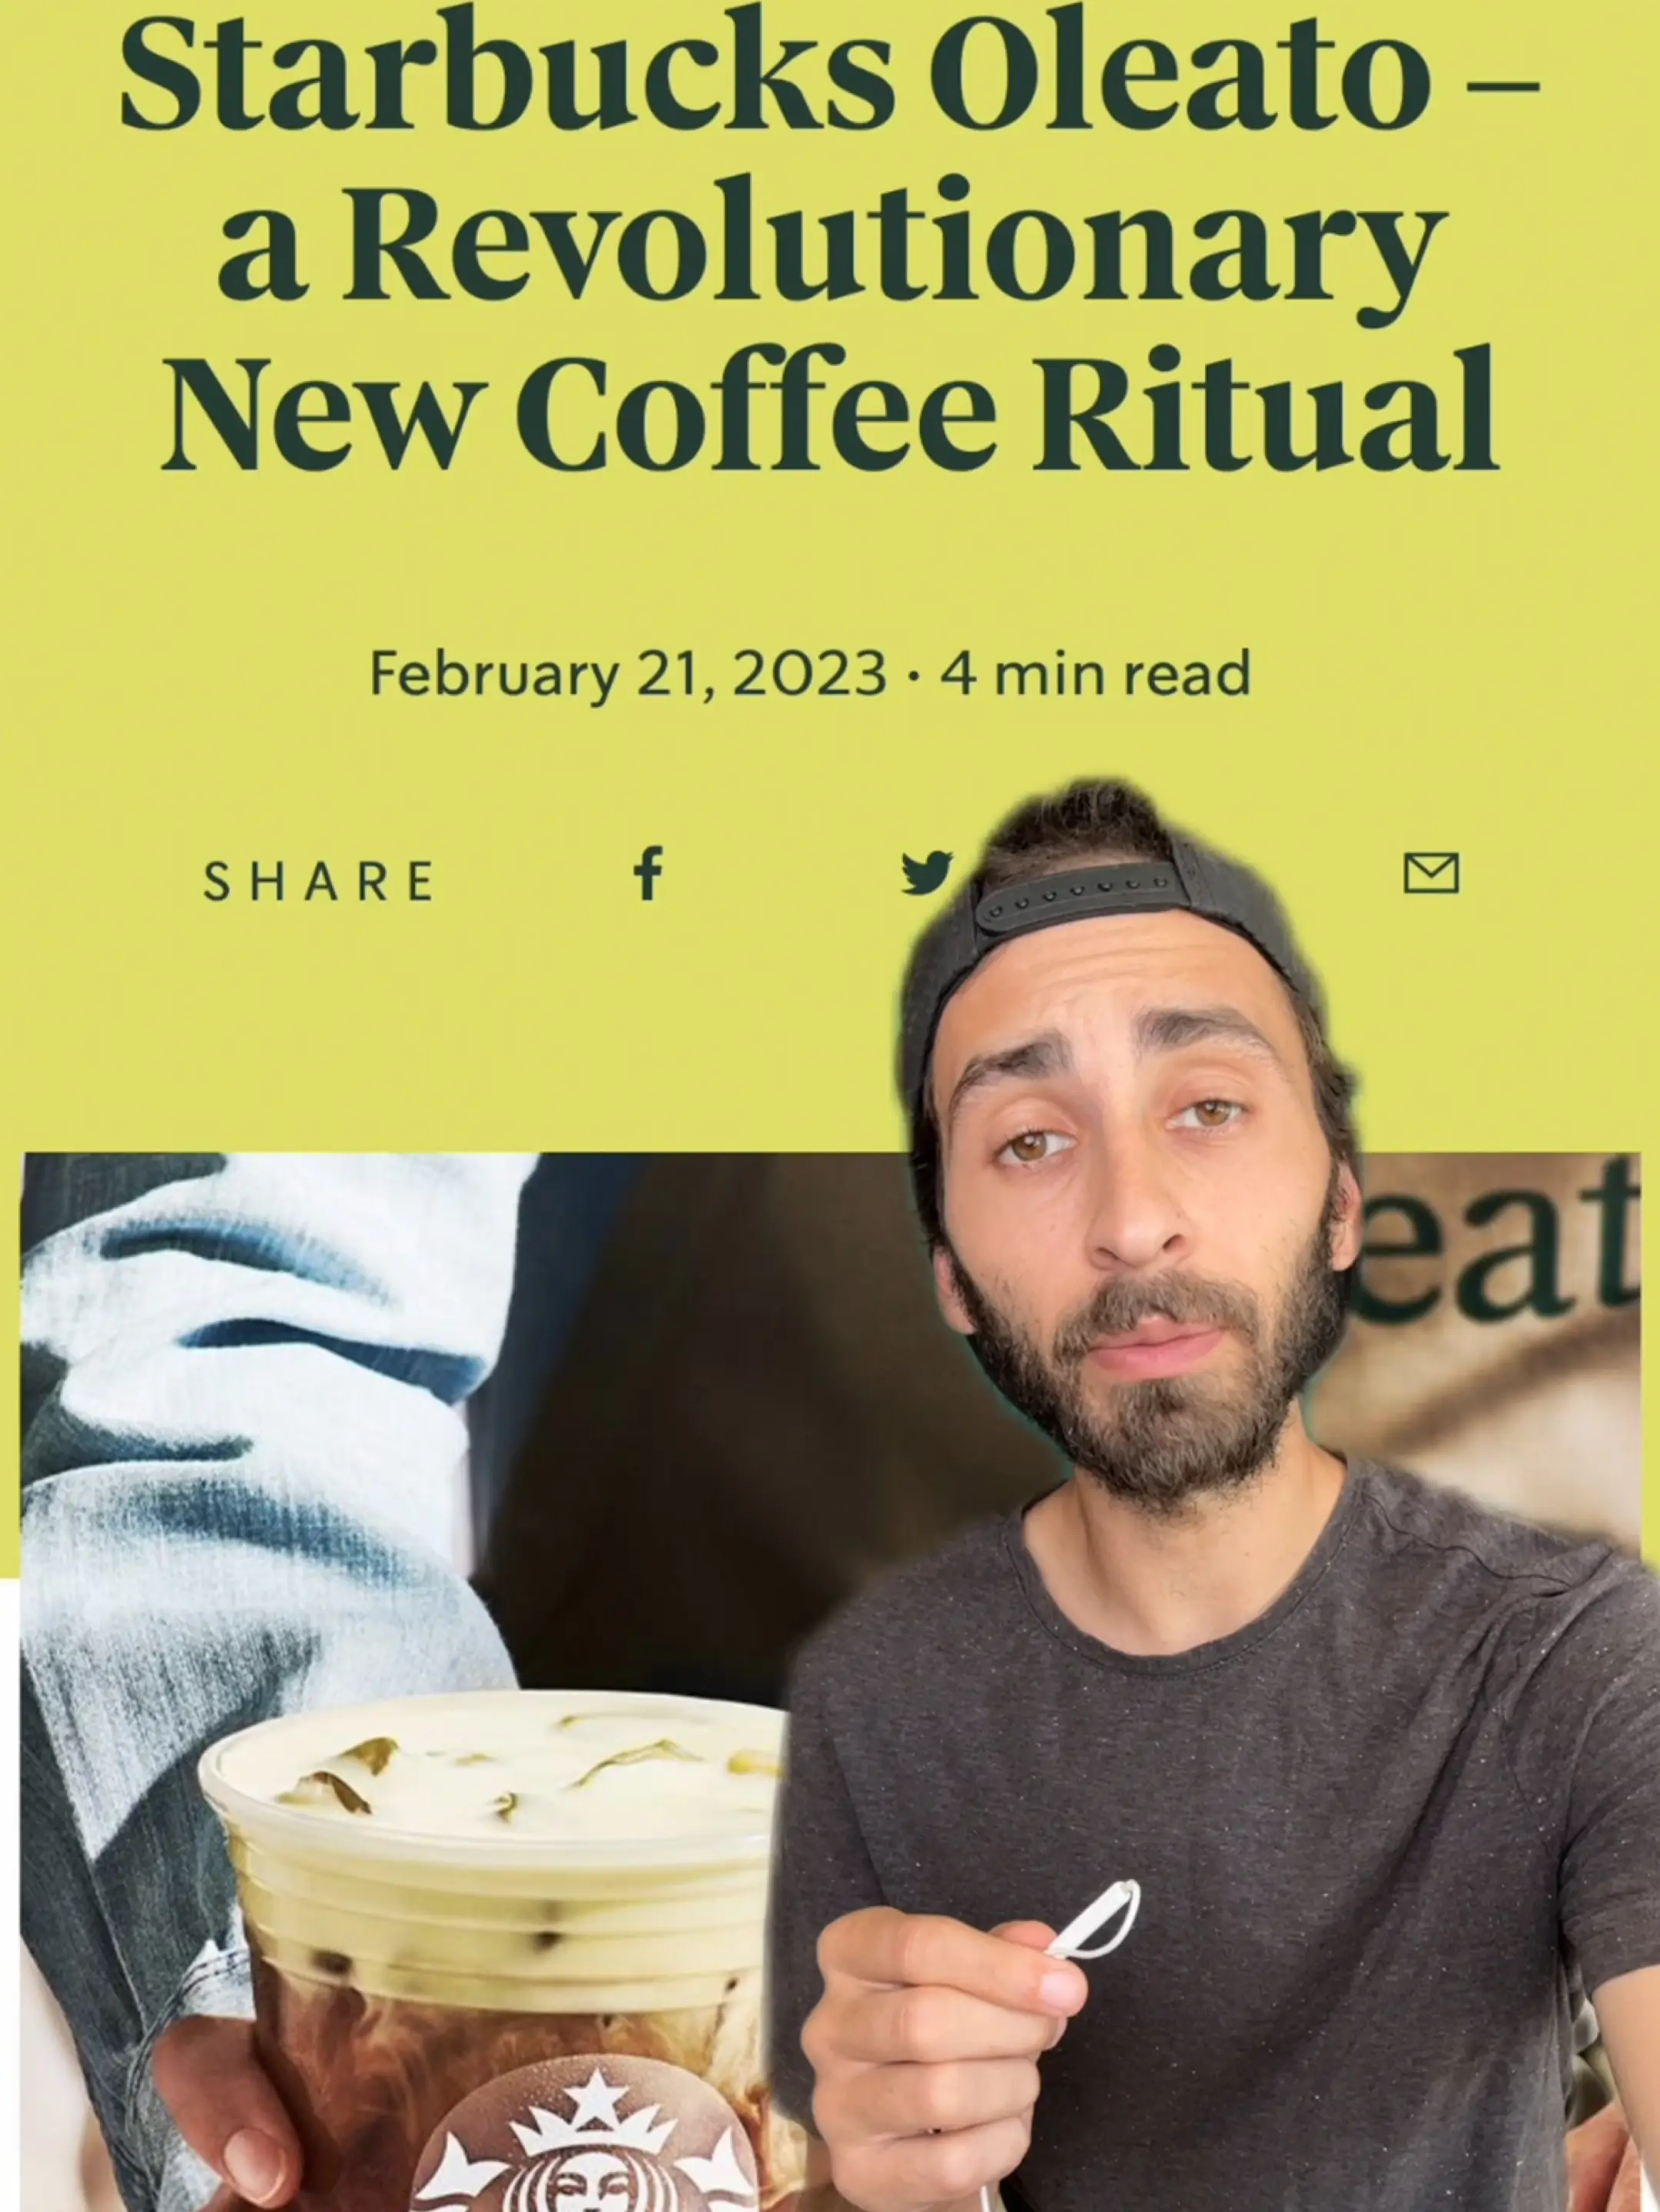 Introducing Starbucks Oleato – a Revolutionary New Coffee Ritual